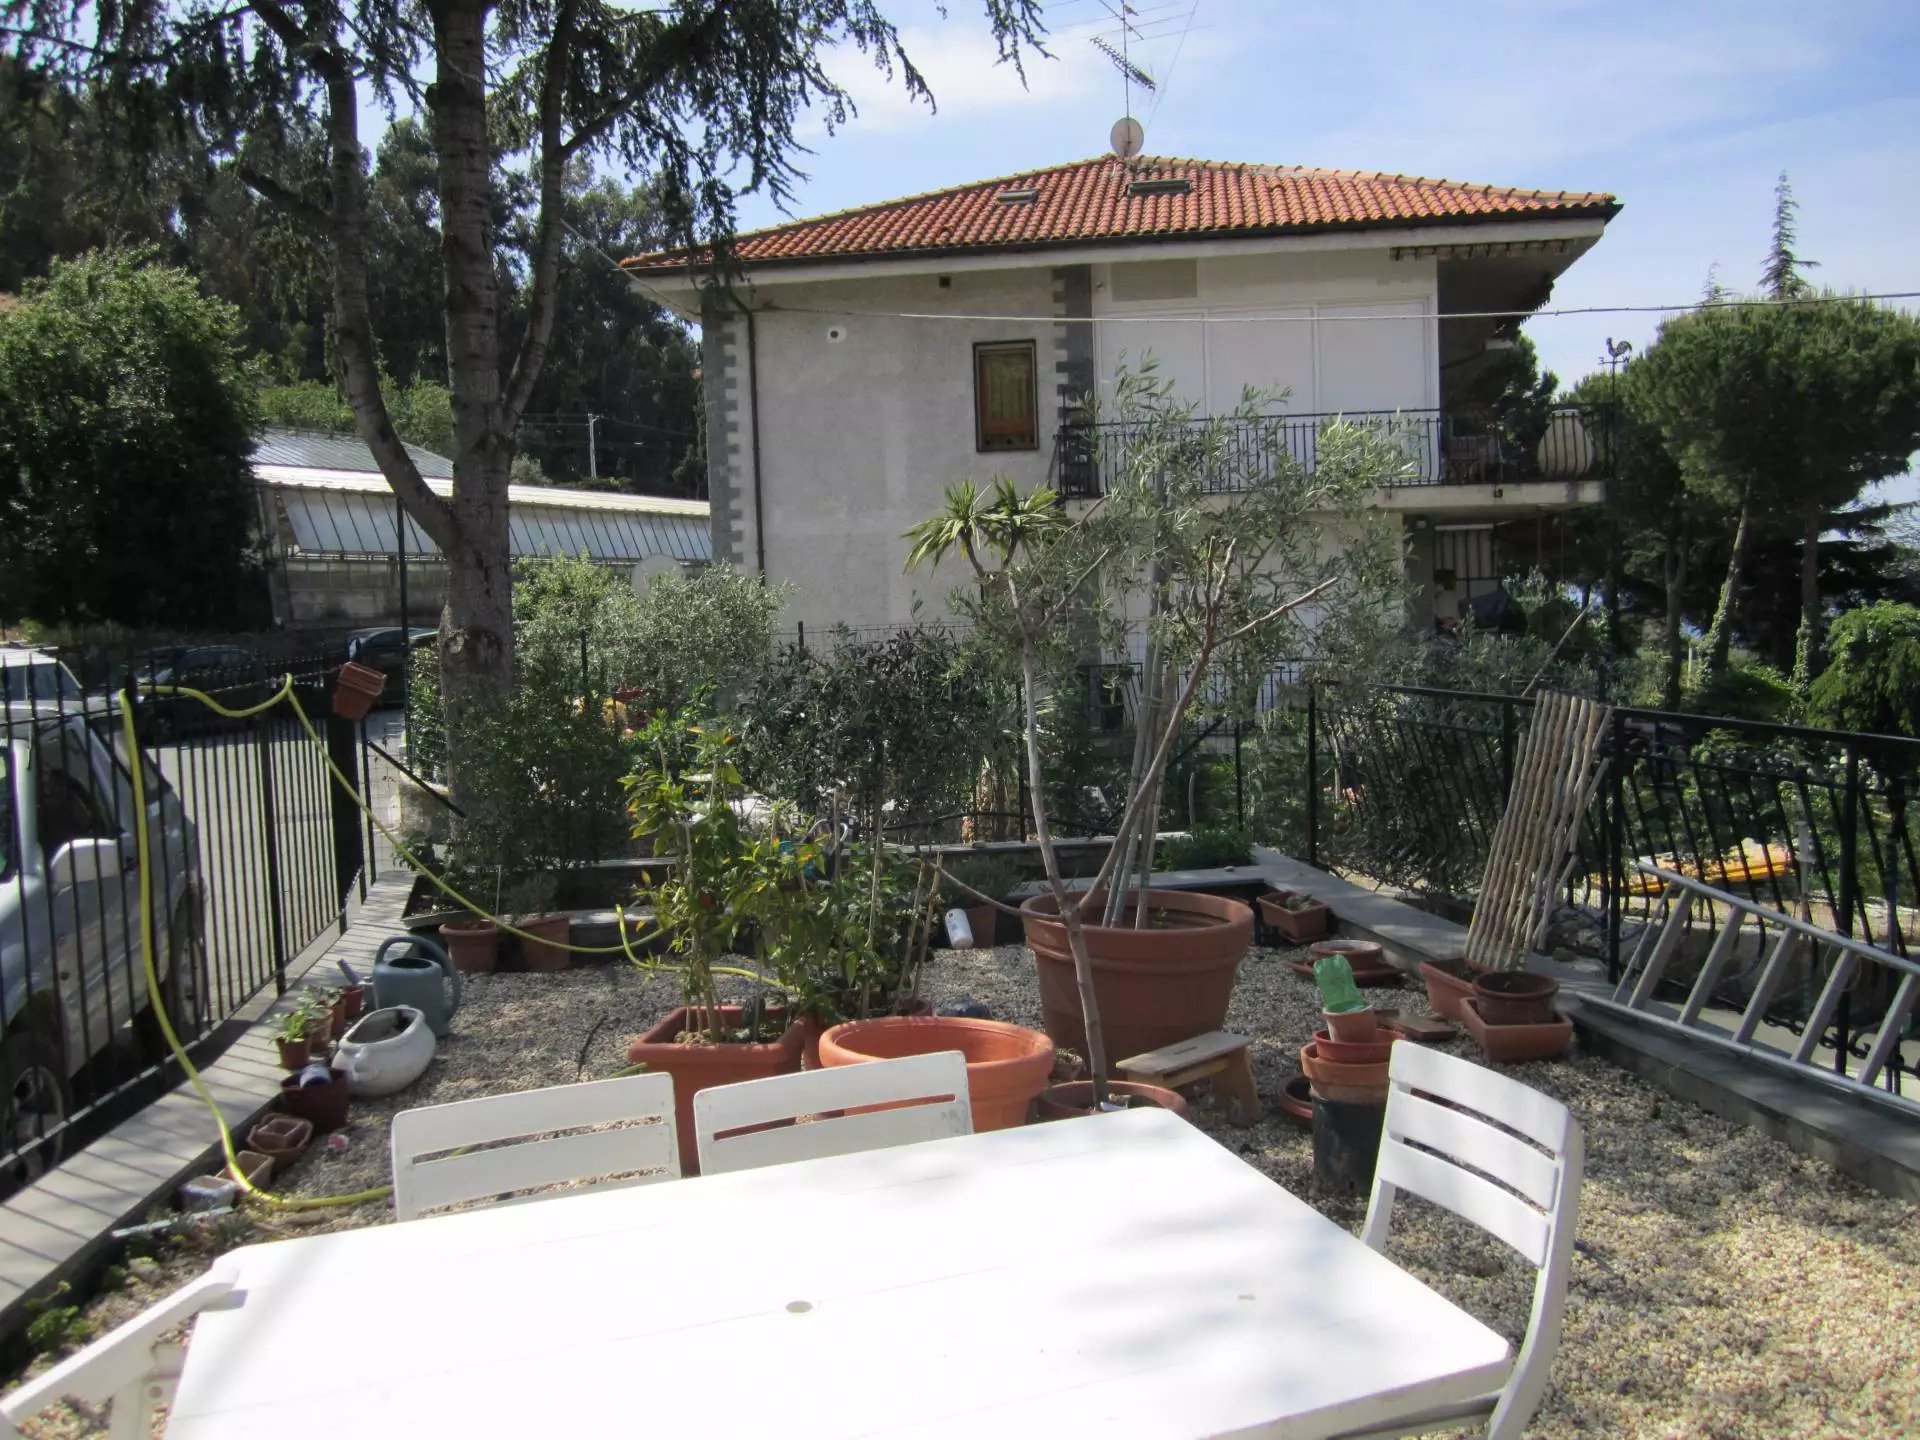 Sale Apartment villa - Bordighera Sapergo - Italy